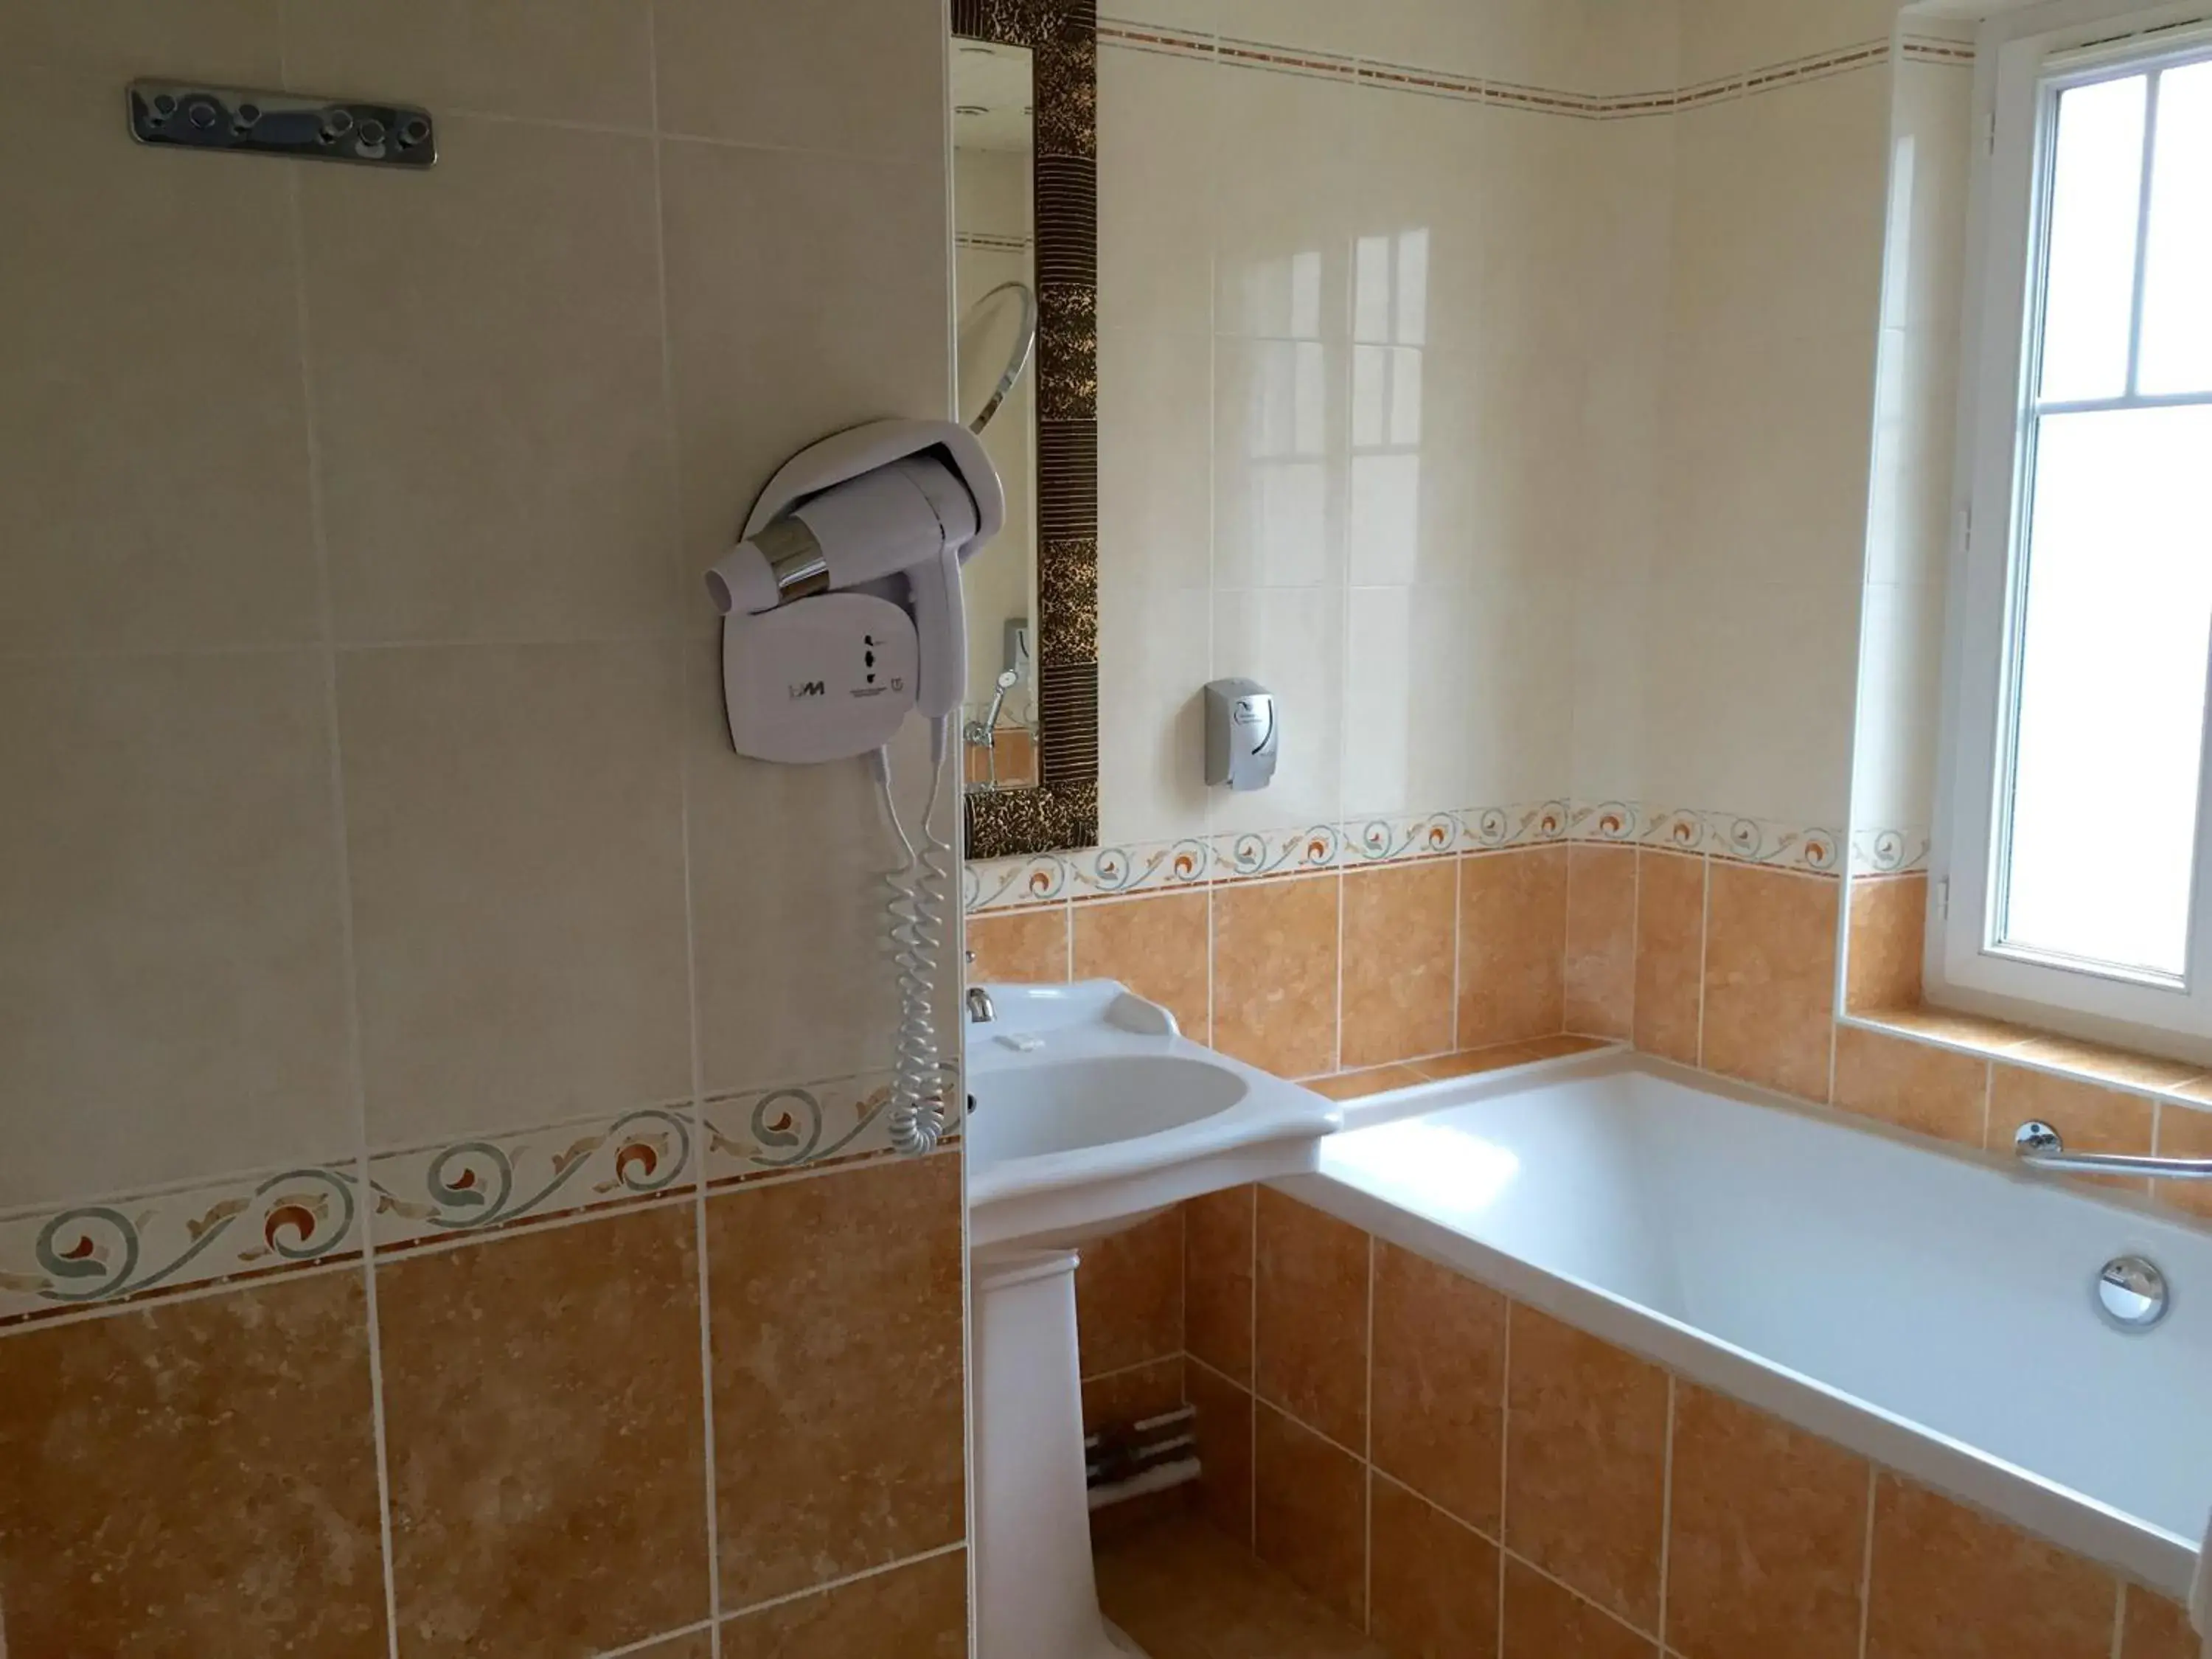 Bathroom in Hotel de Normandie